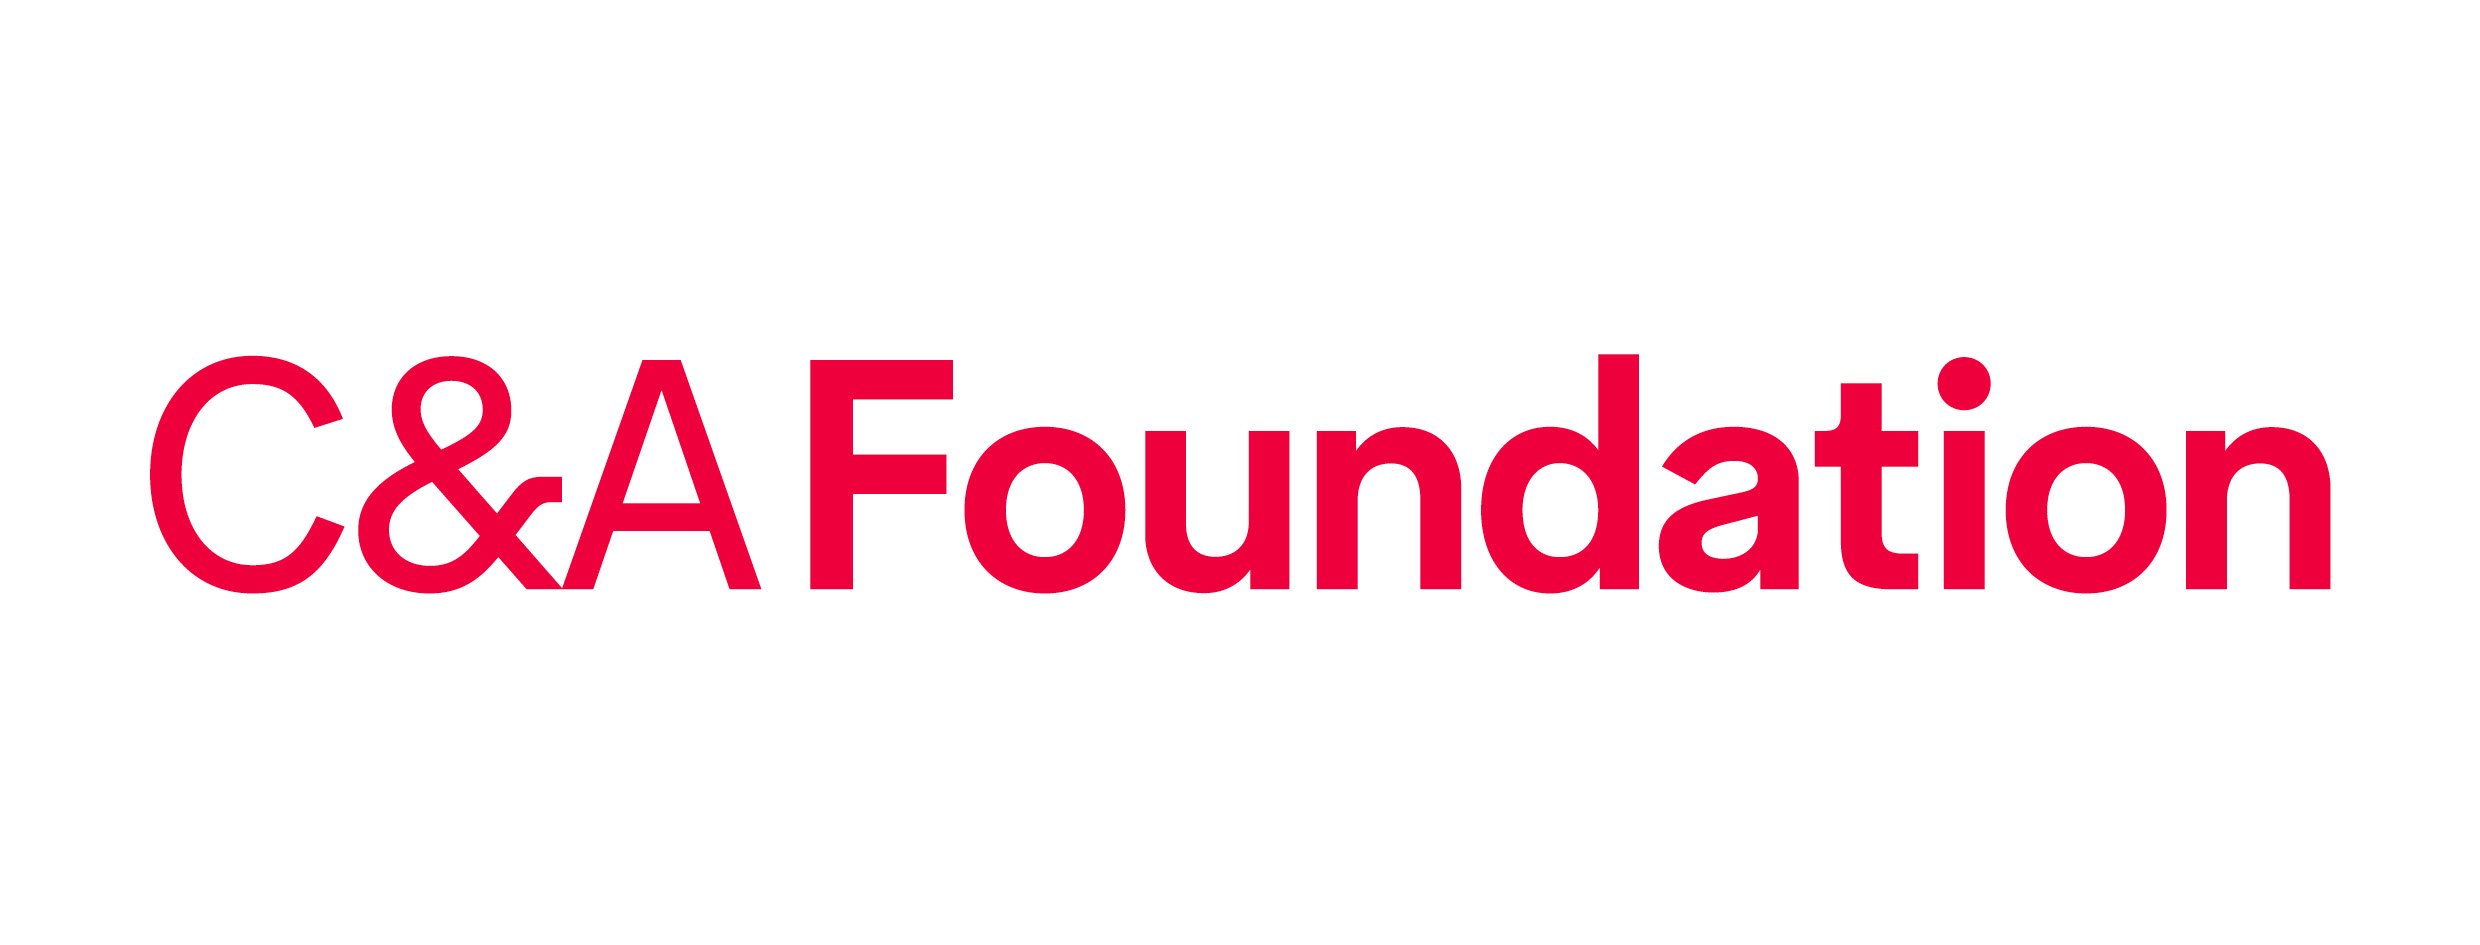 C&A Foundation